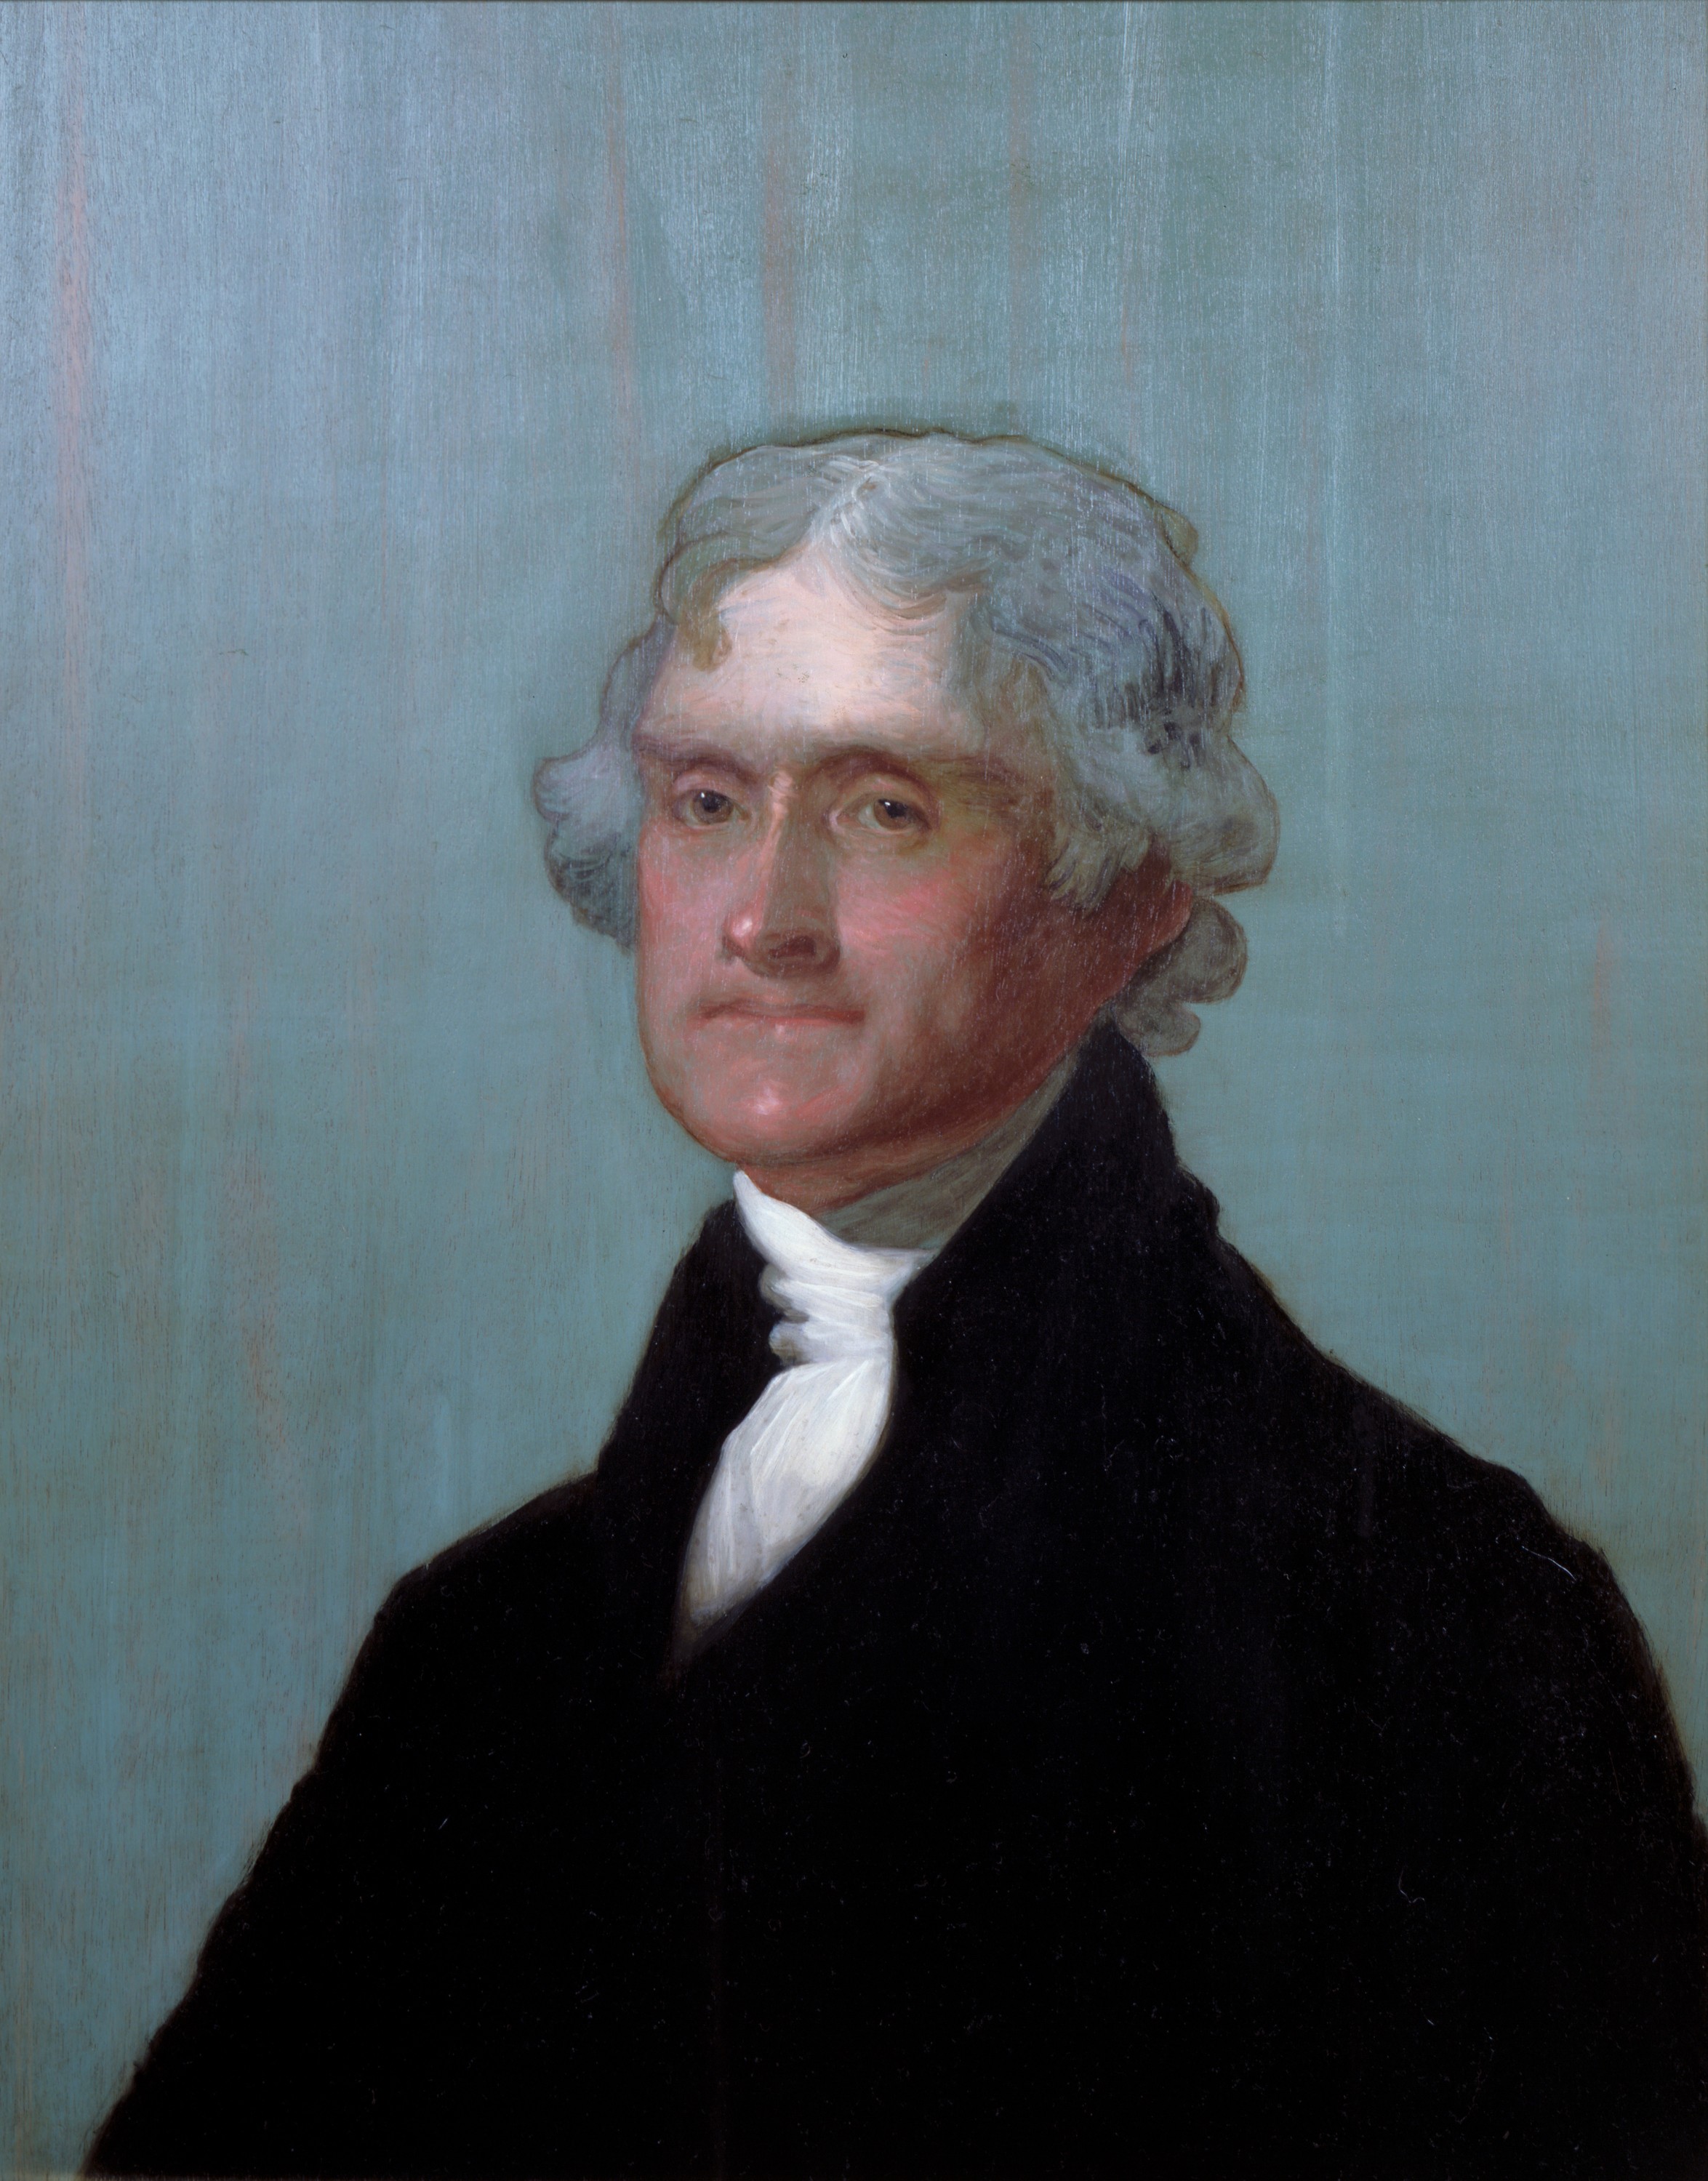 1805 Edgehill Portrait of Thomas Jefferson by Gilbert Stuart